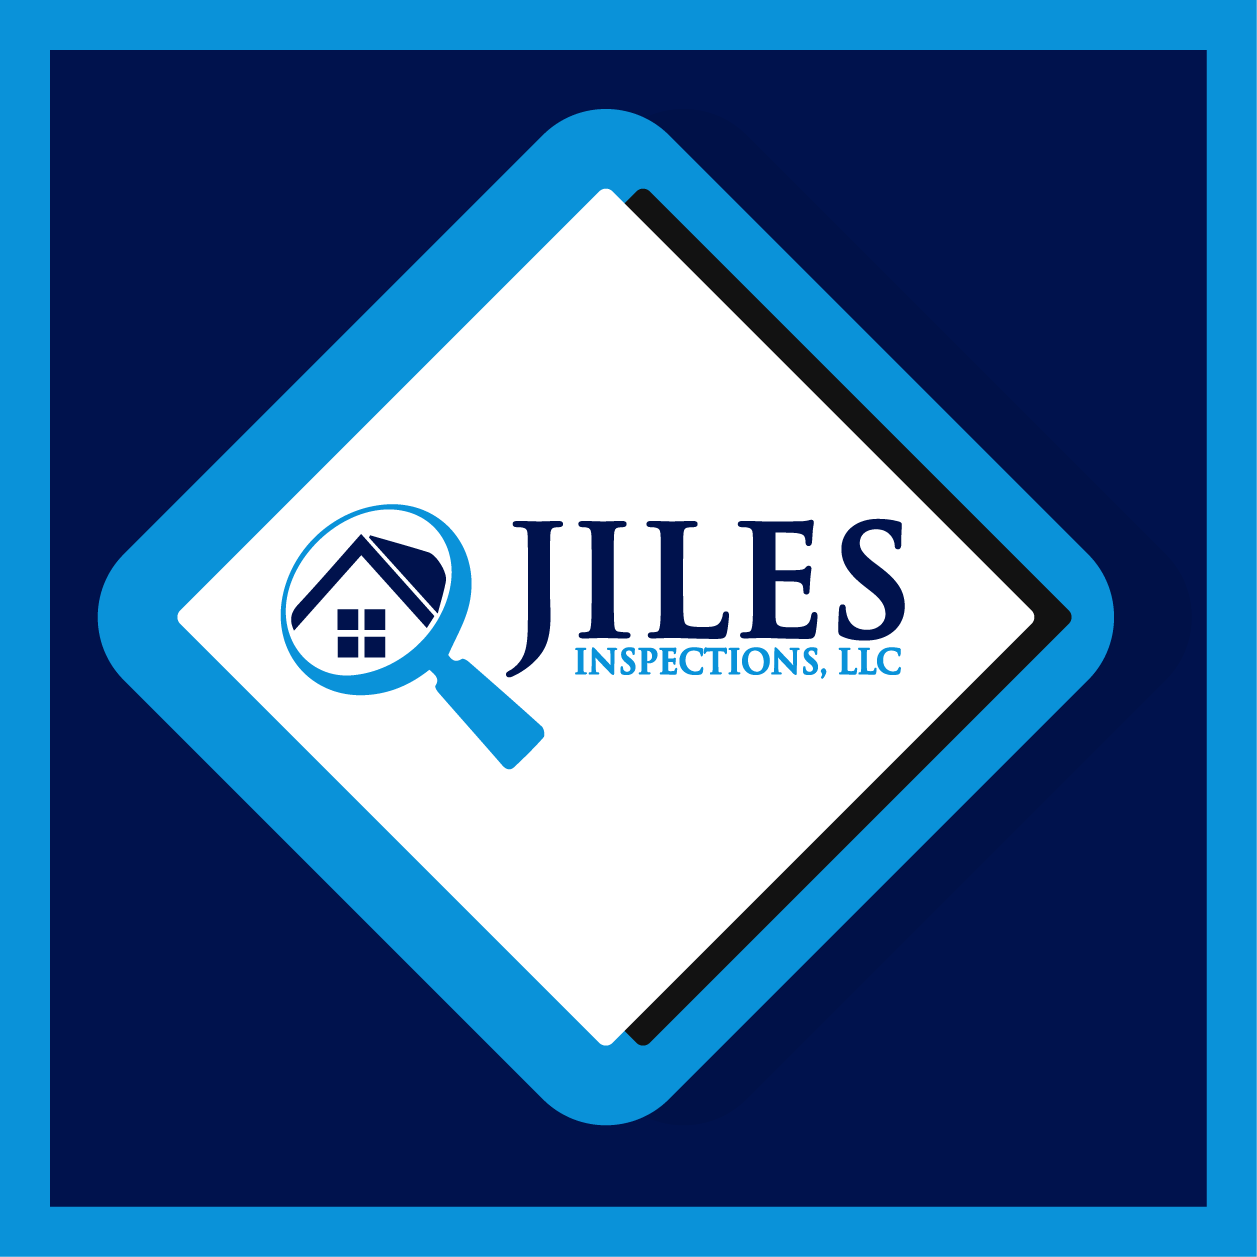 Jiles Inspections, LLC Logo